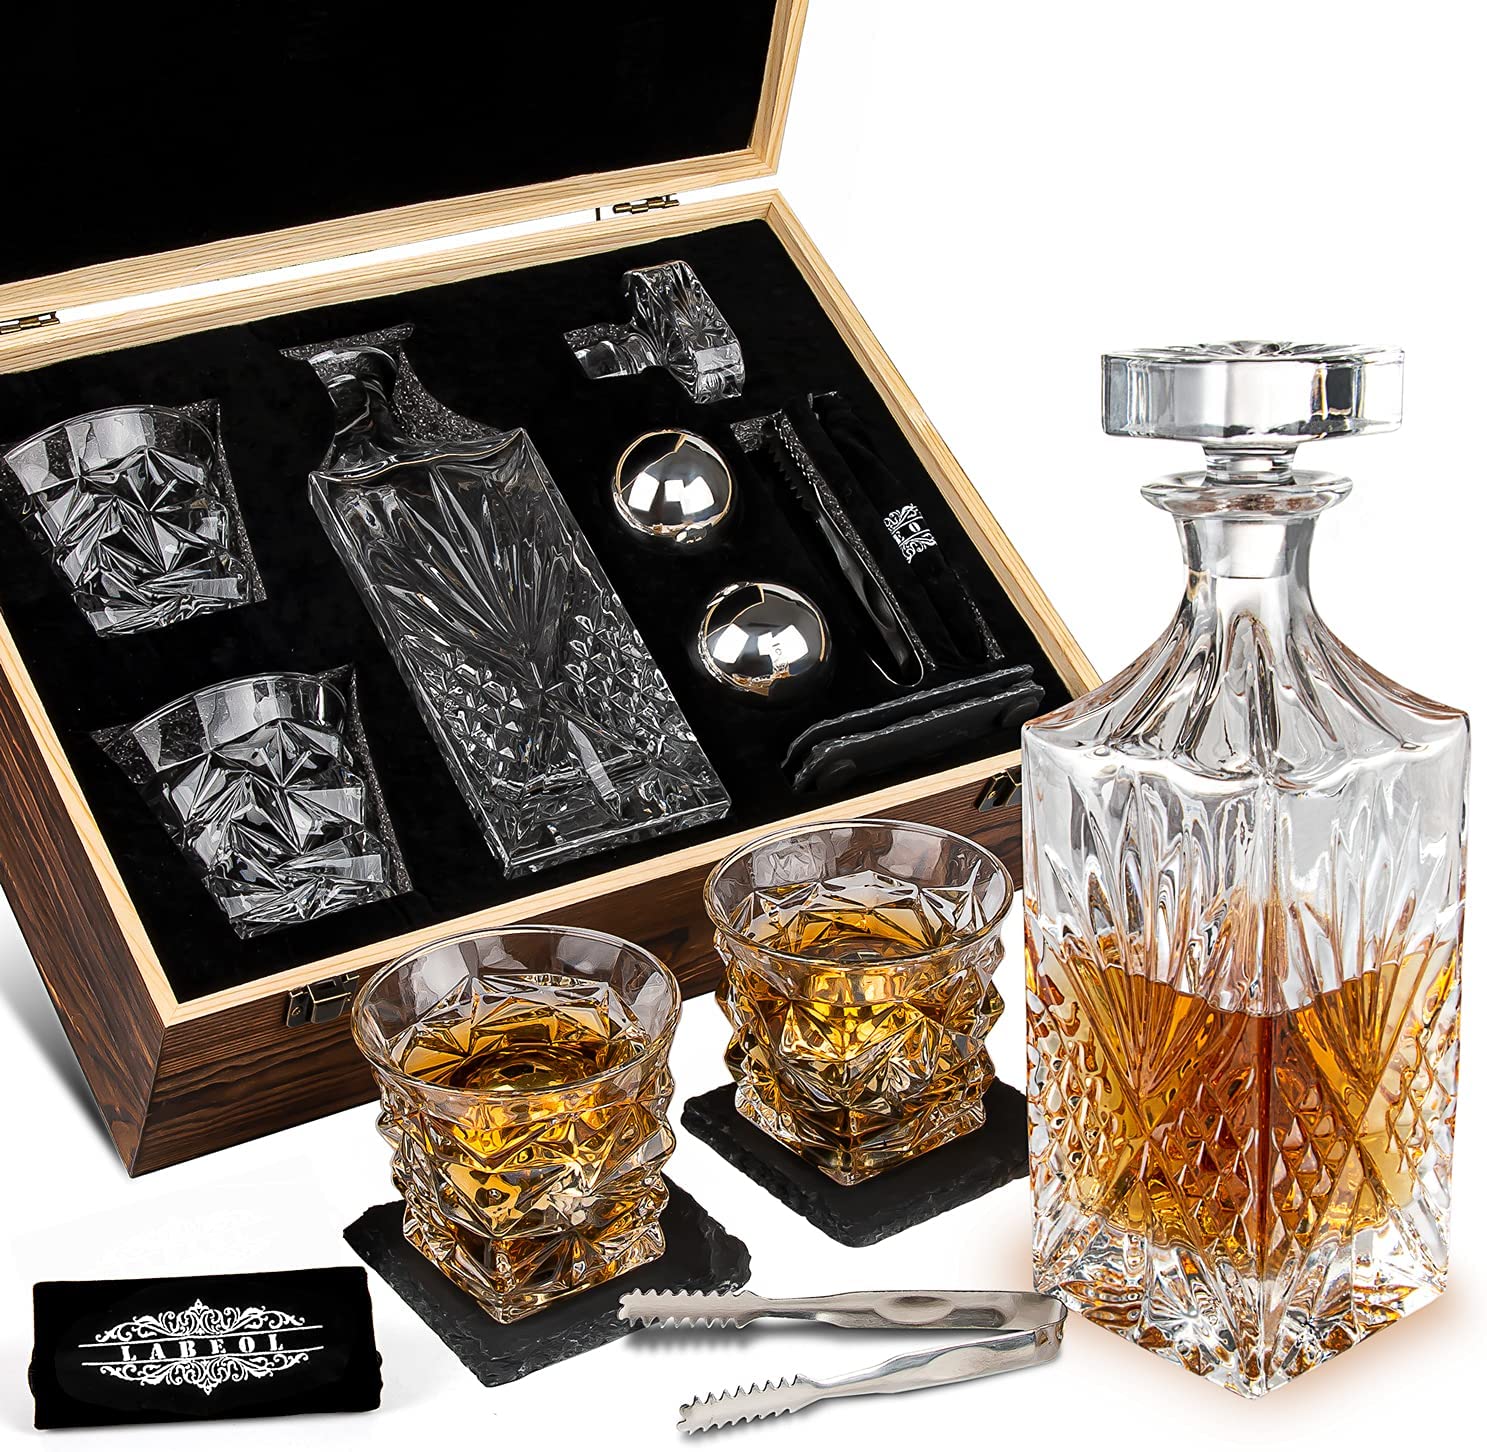 OEM Manufacturer Box For Gift - Whisky decanter wine Glasses Set 2 Reusable Stainless Steel Whisky Ball  Slate Coasters Best Gifts for Men – Shunstone